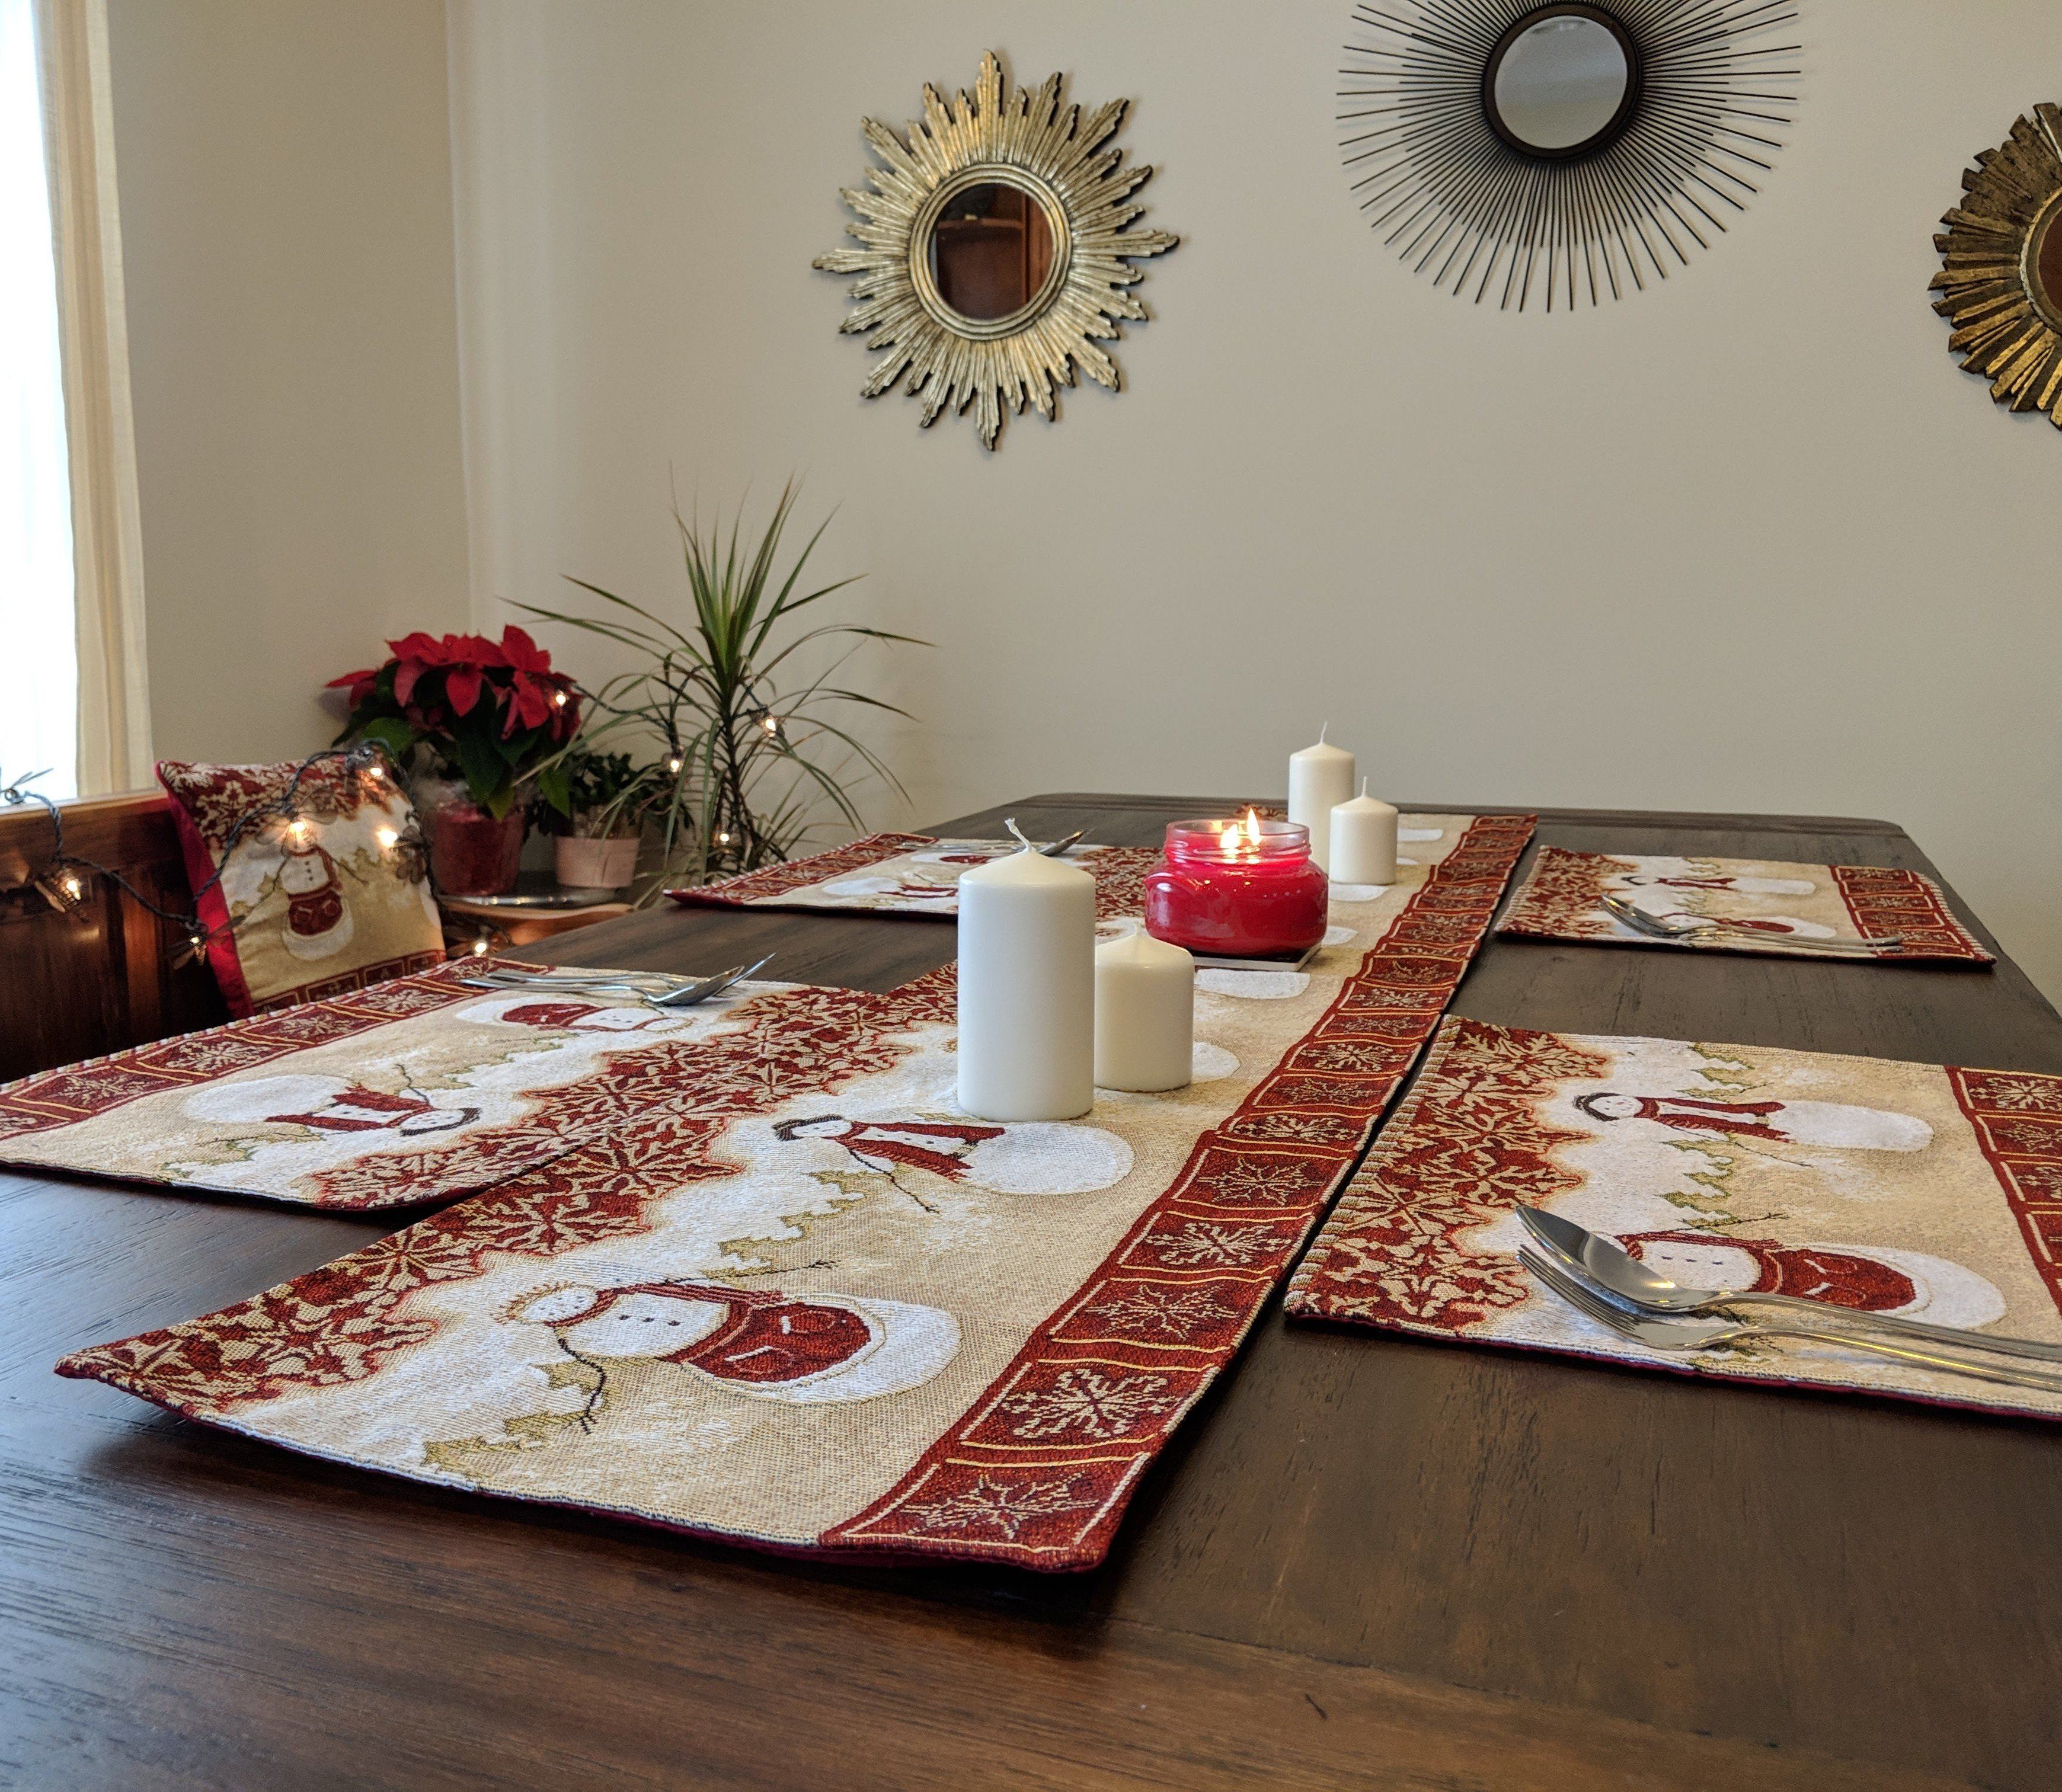 Tache Mr. & Mrs. Snowman Couple Woven Tapestry Placemat Set of 4 (10323PM) - Tache Home Fashion